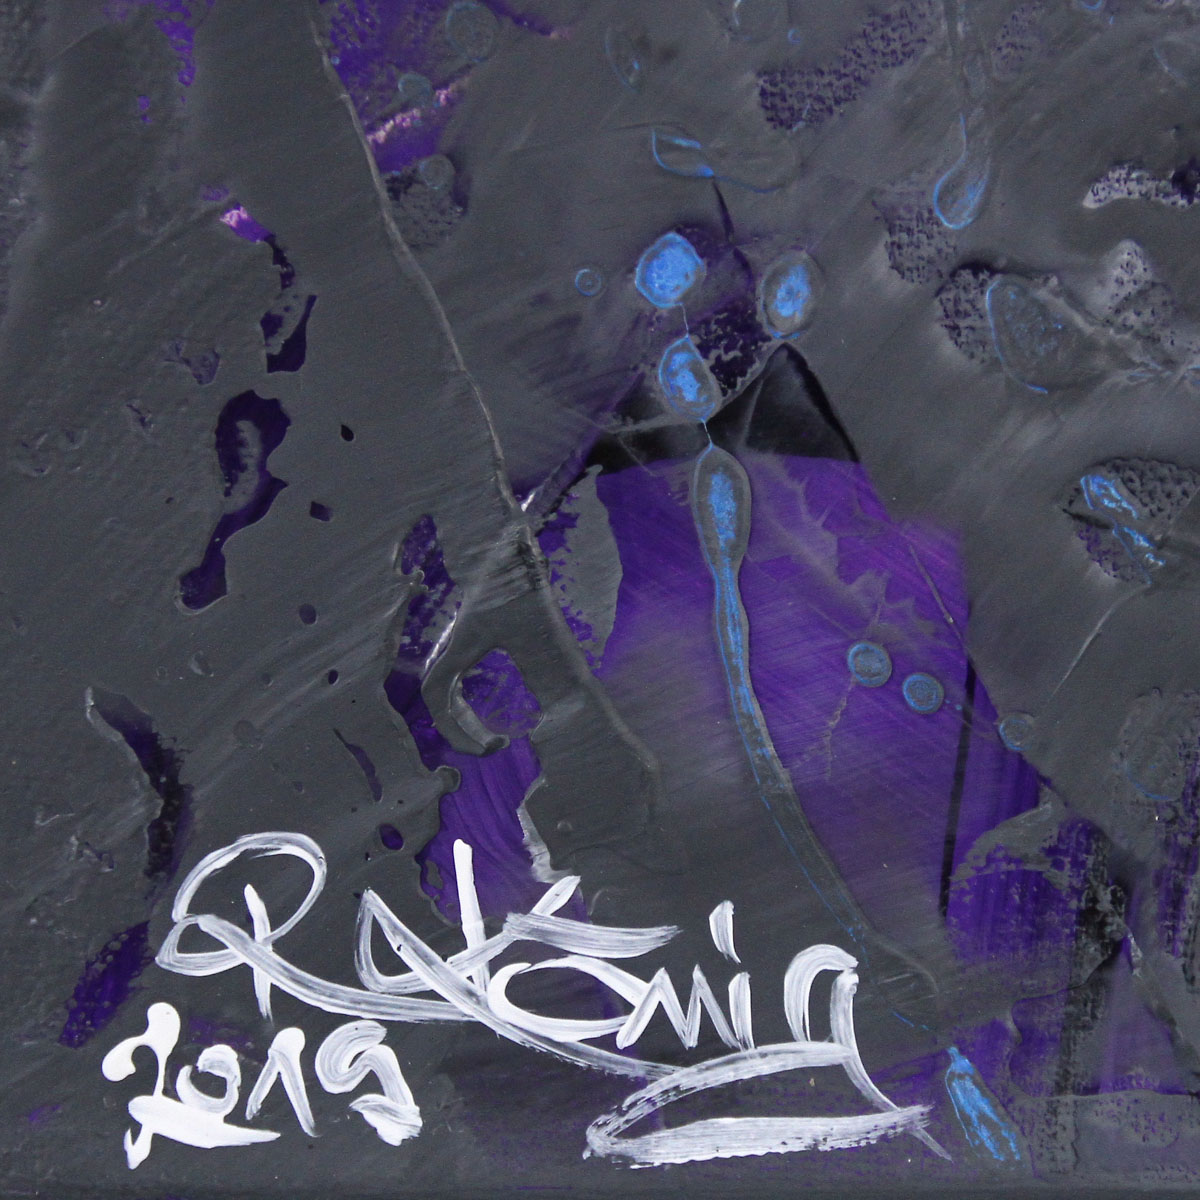 Gemälde abstrakt, R.König: "Purple Rain"